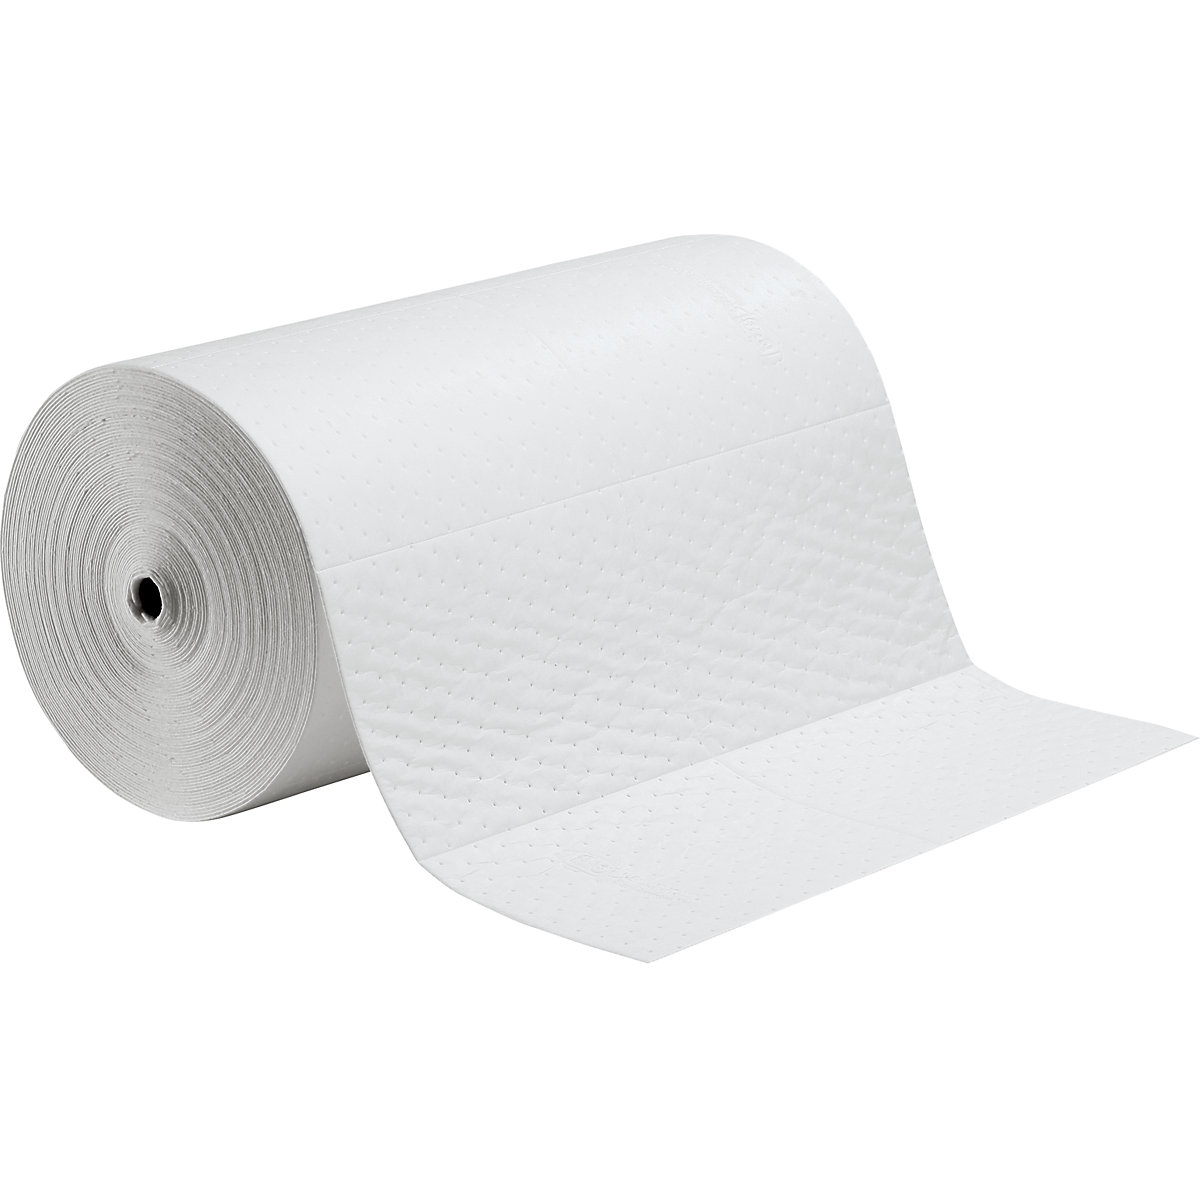 STAT-MAT® absorbent sheeting roll – PIG